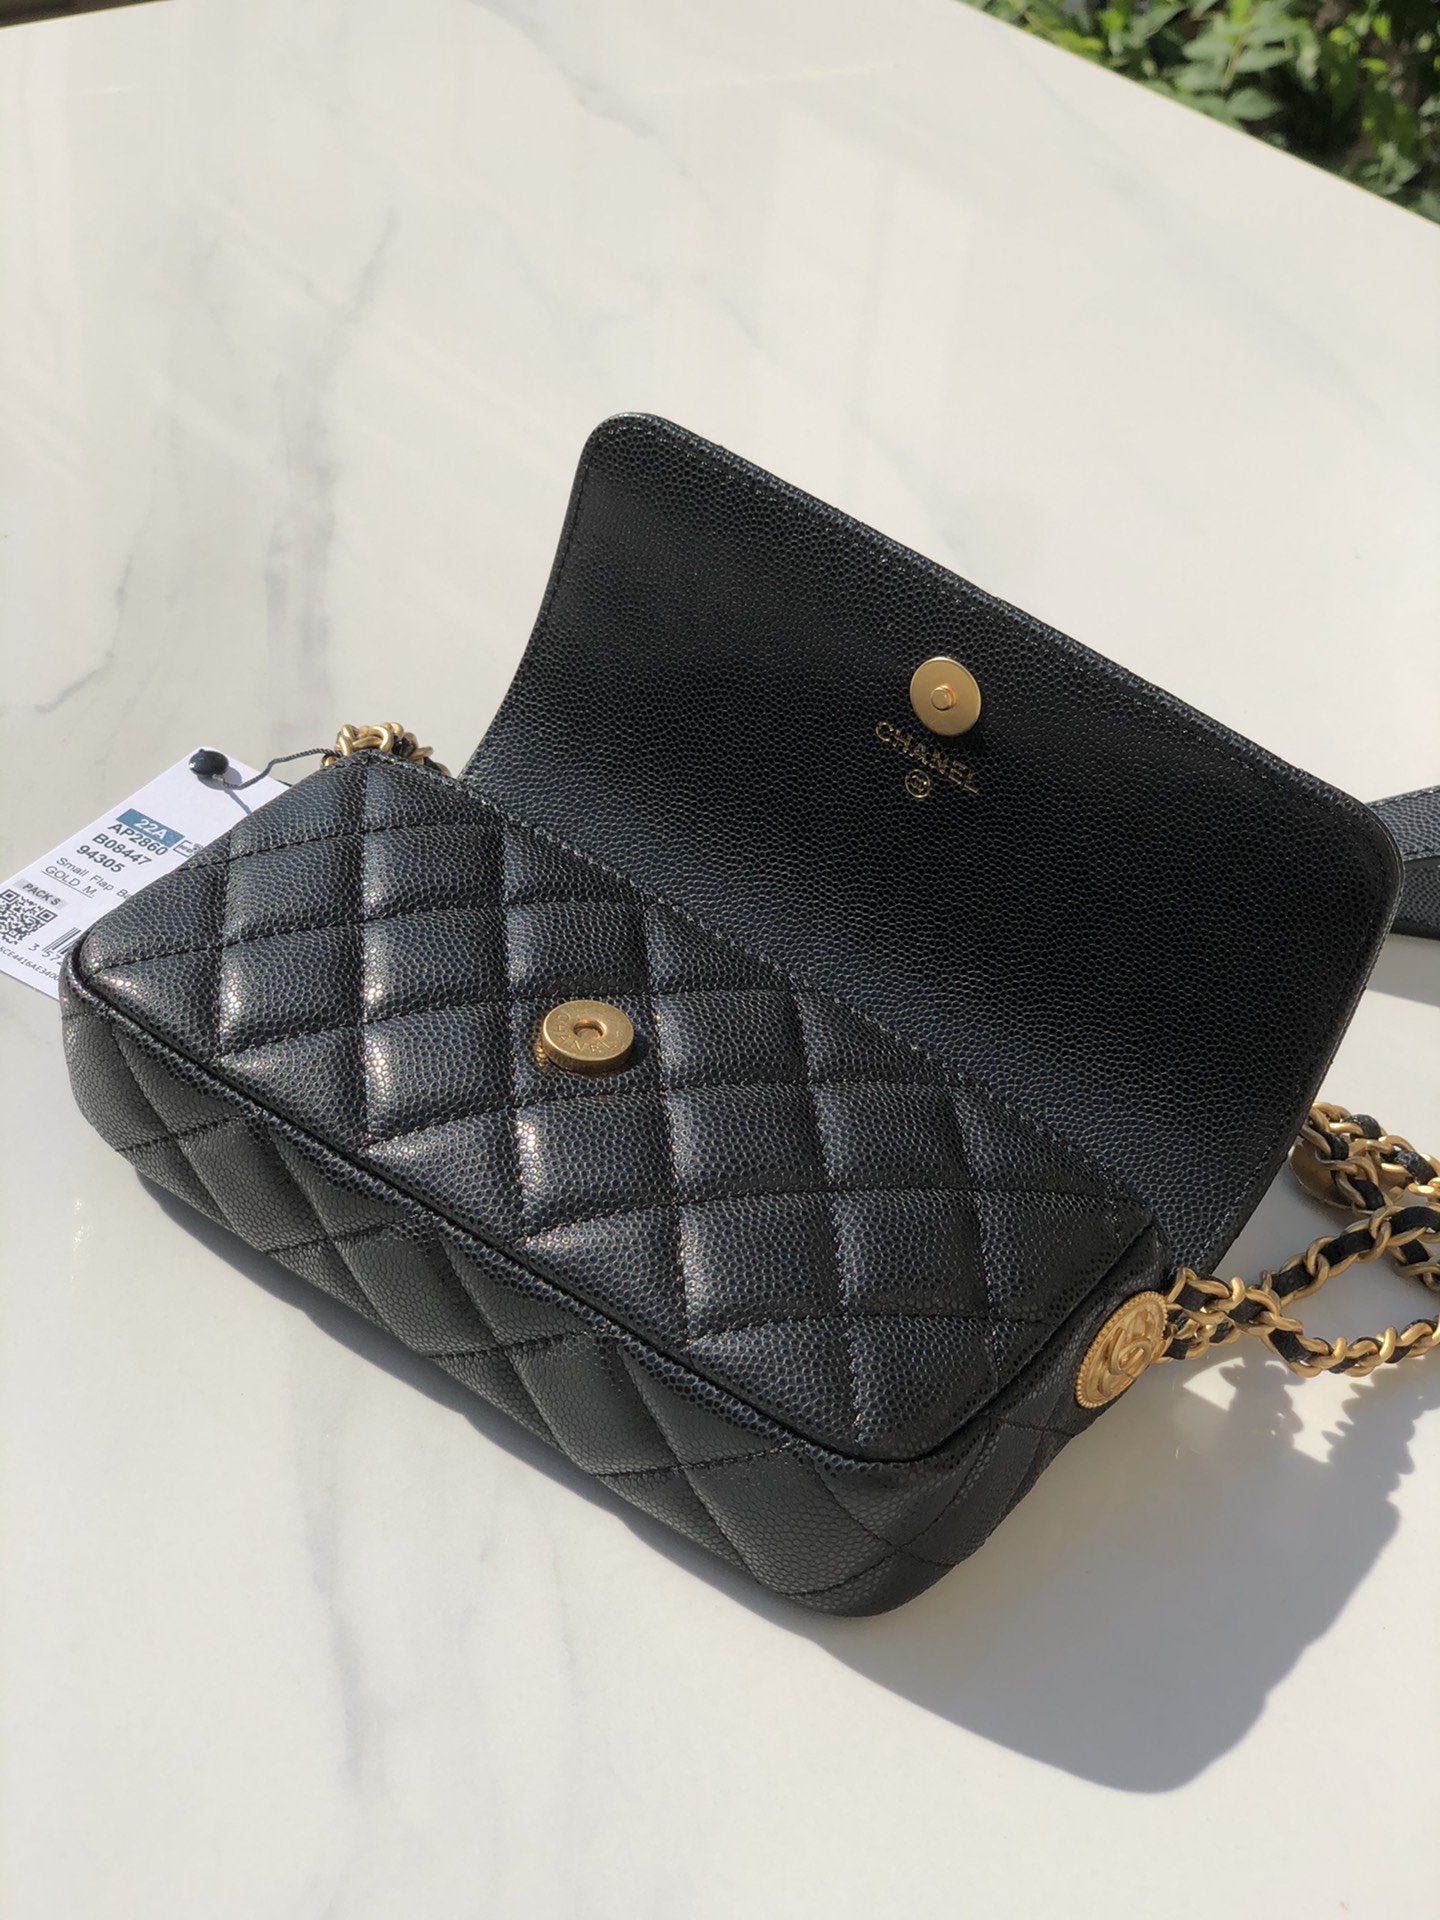 ChanelSmall Flap Bags Gold Hardware Black For Women, Women&#8217;s Handbags, Shoulder Bags 7.5in/19.2cm